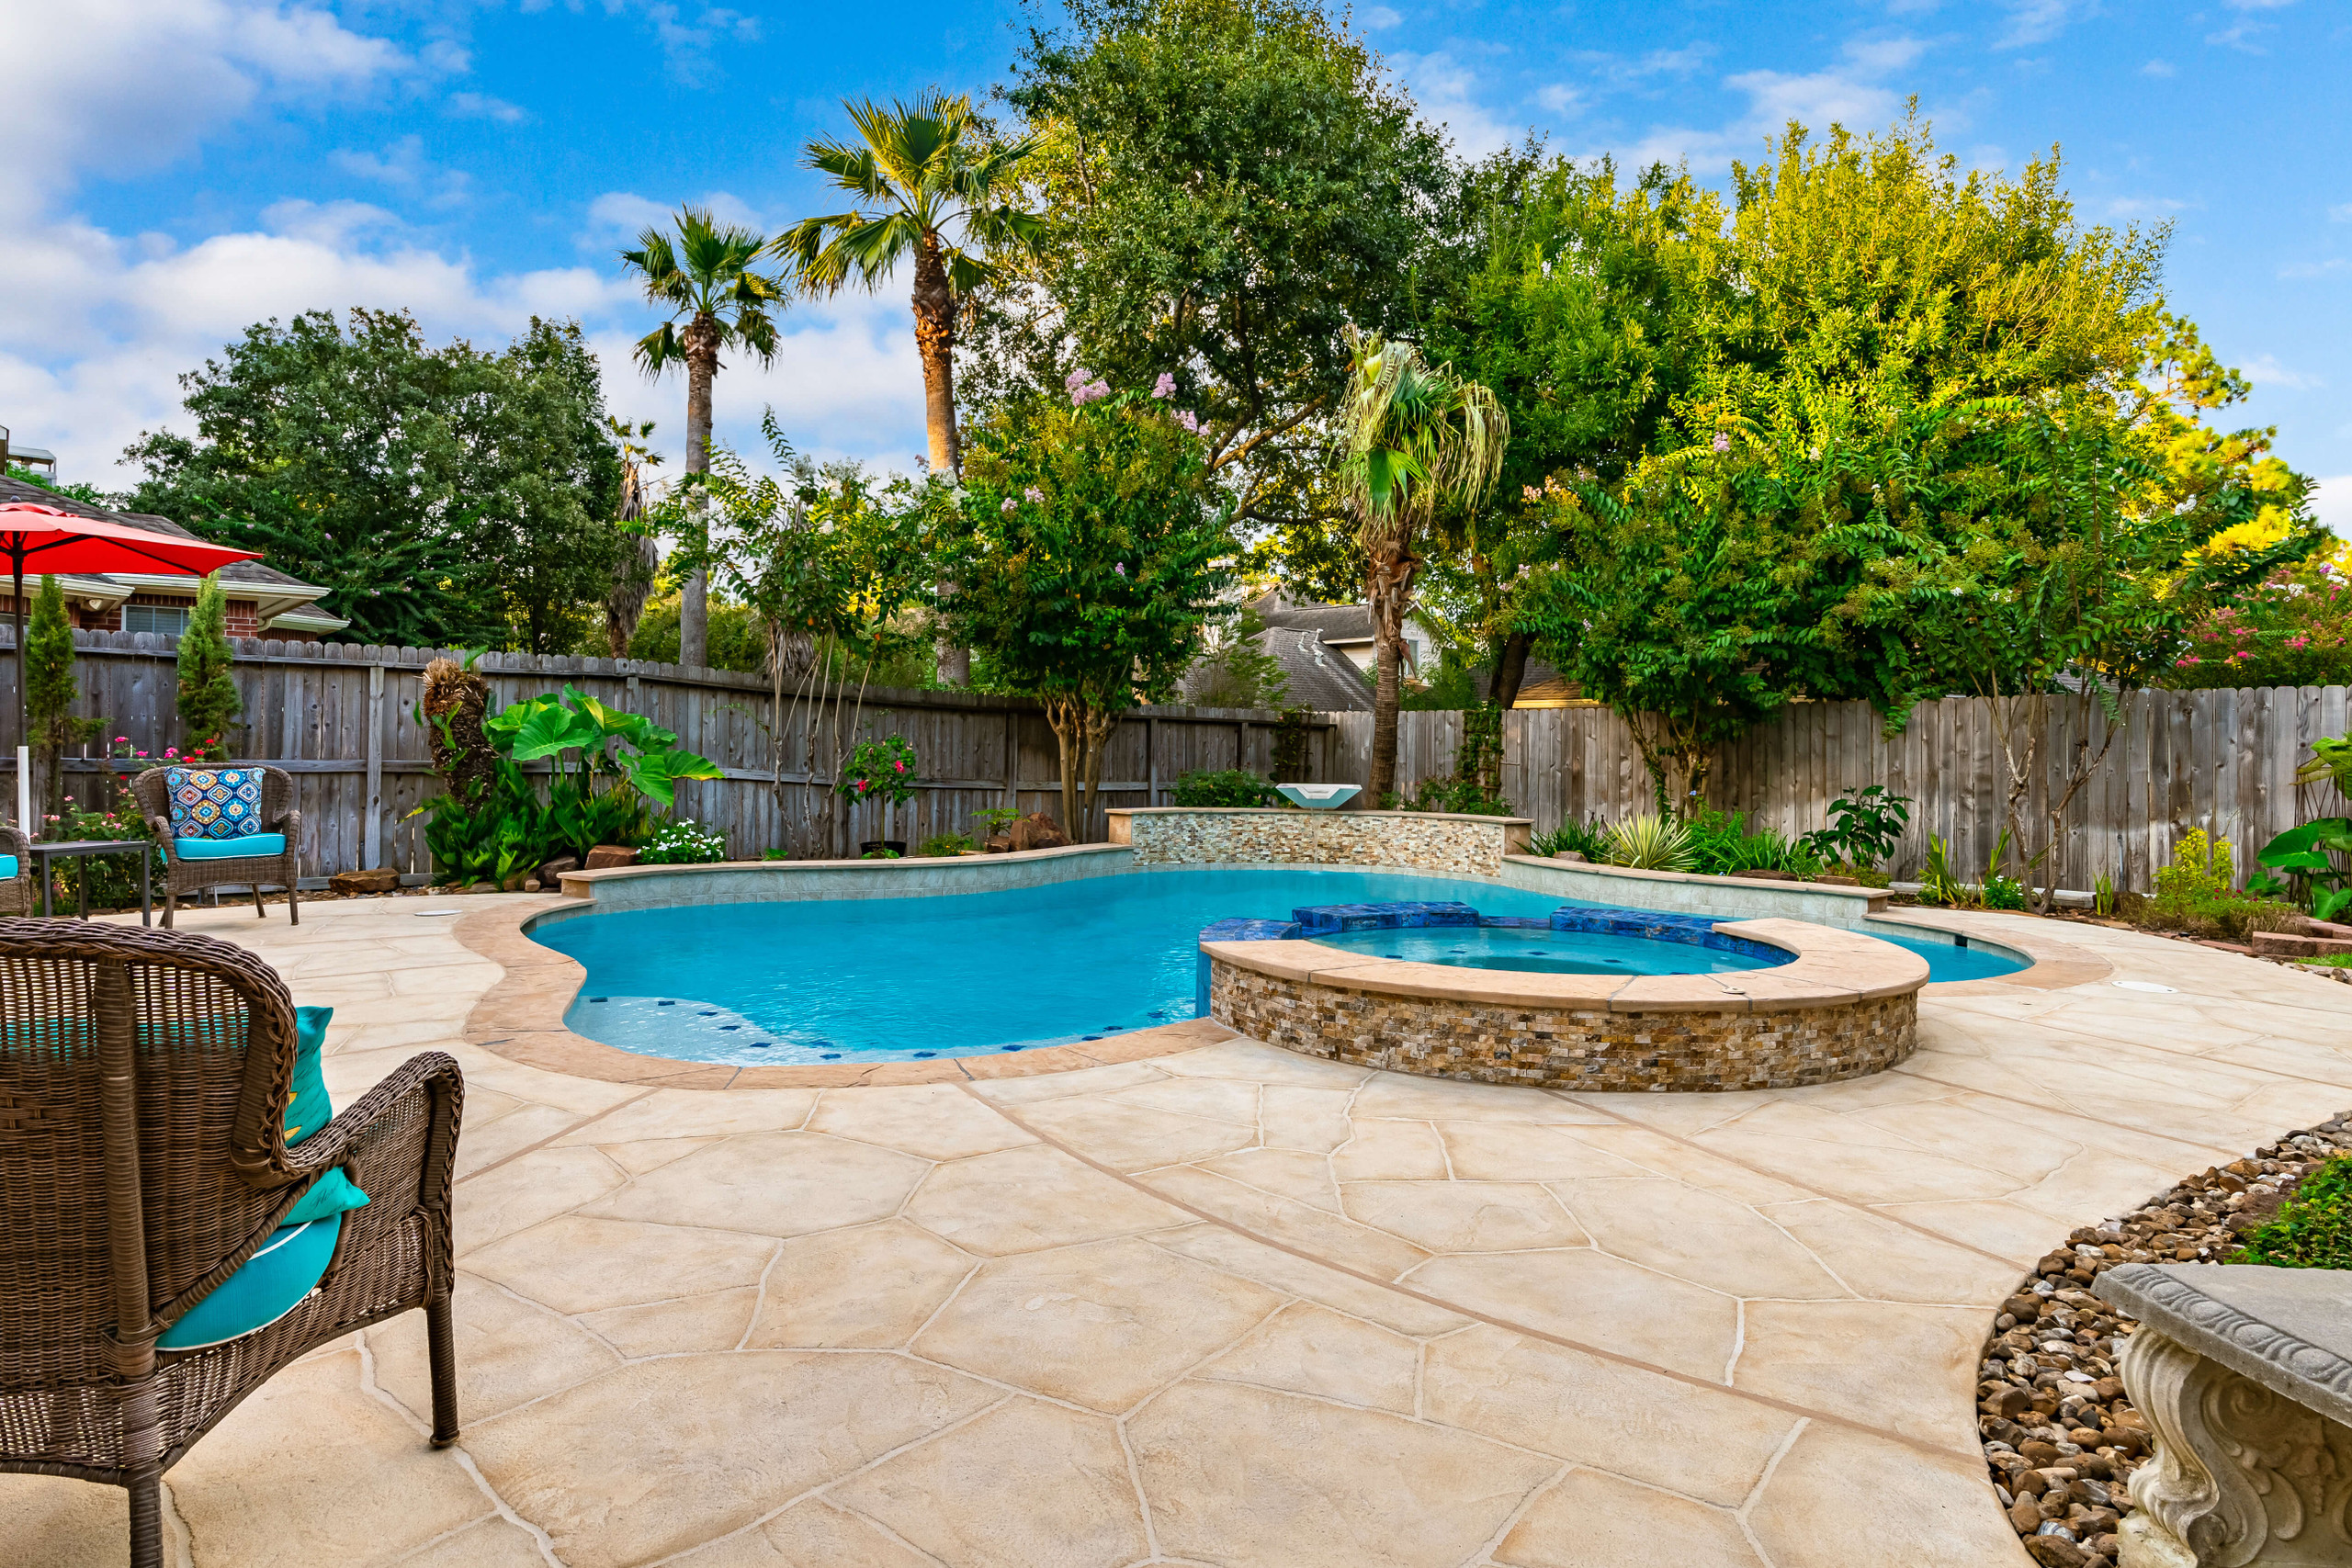 Freeform pool and carvestone pool deck backyard design